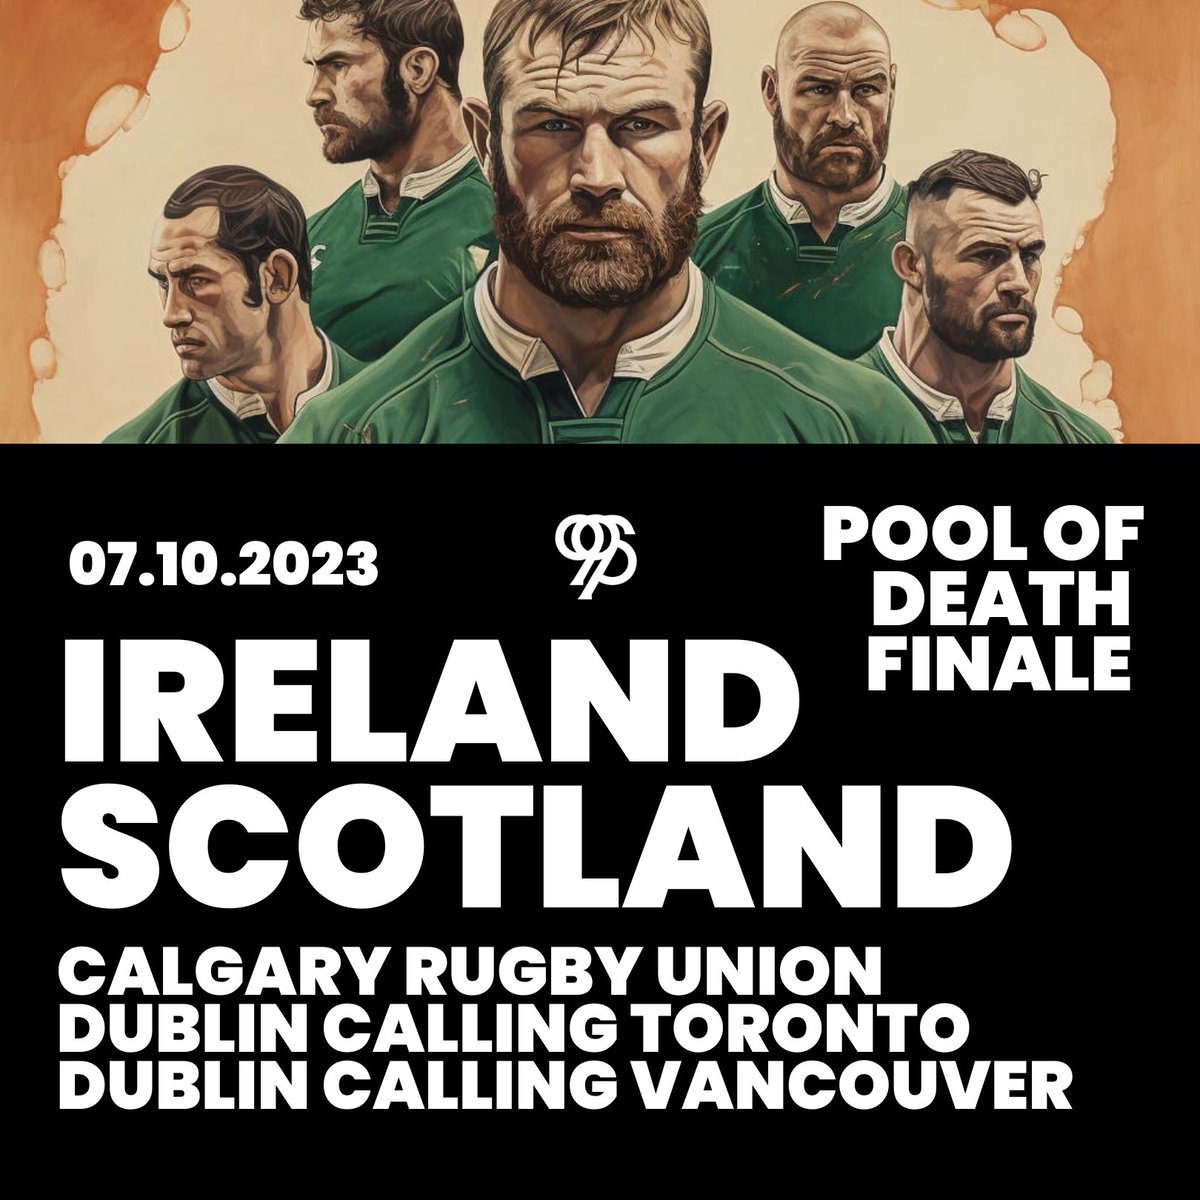 Ireland x Scotland this weekend join us at @dublincallingto + @CalgaryRugby